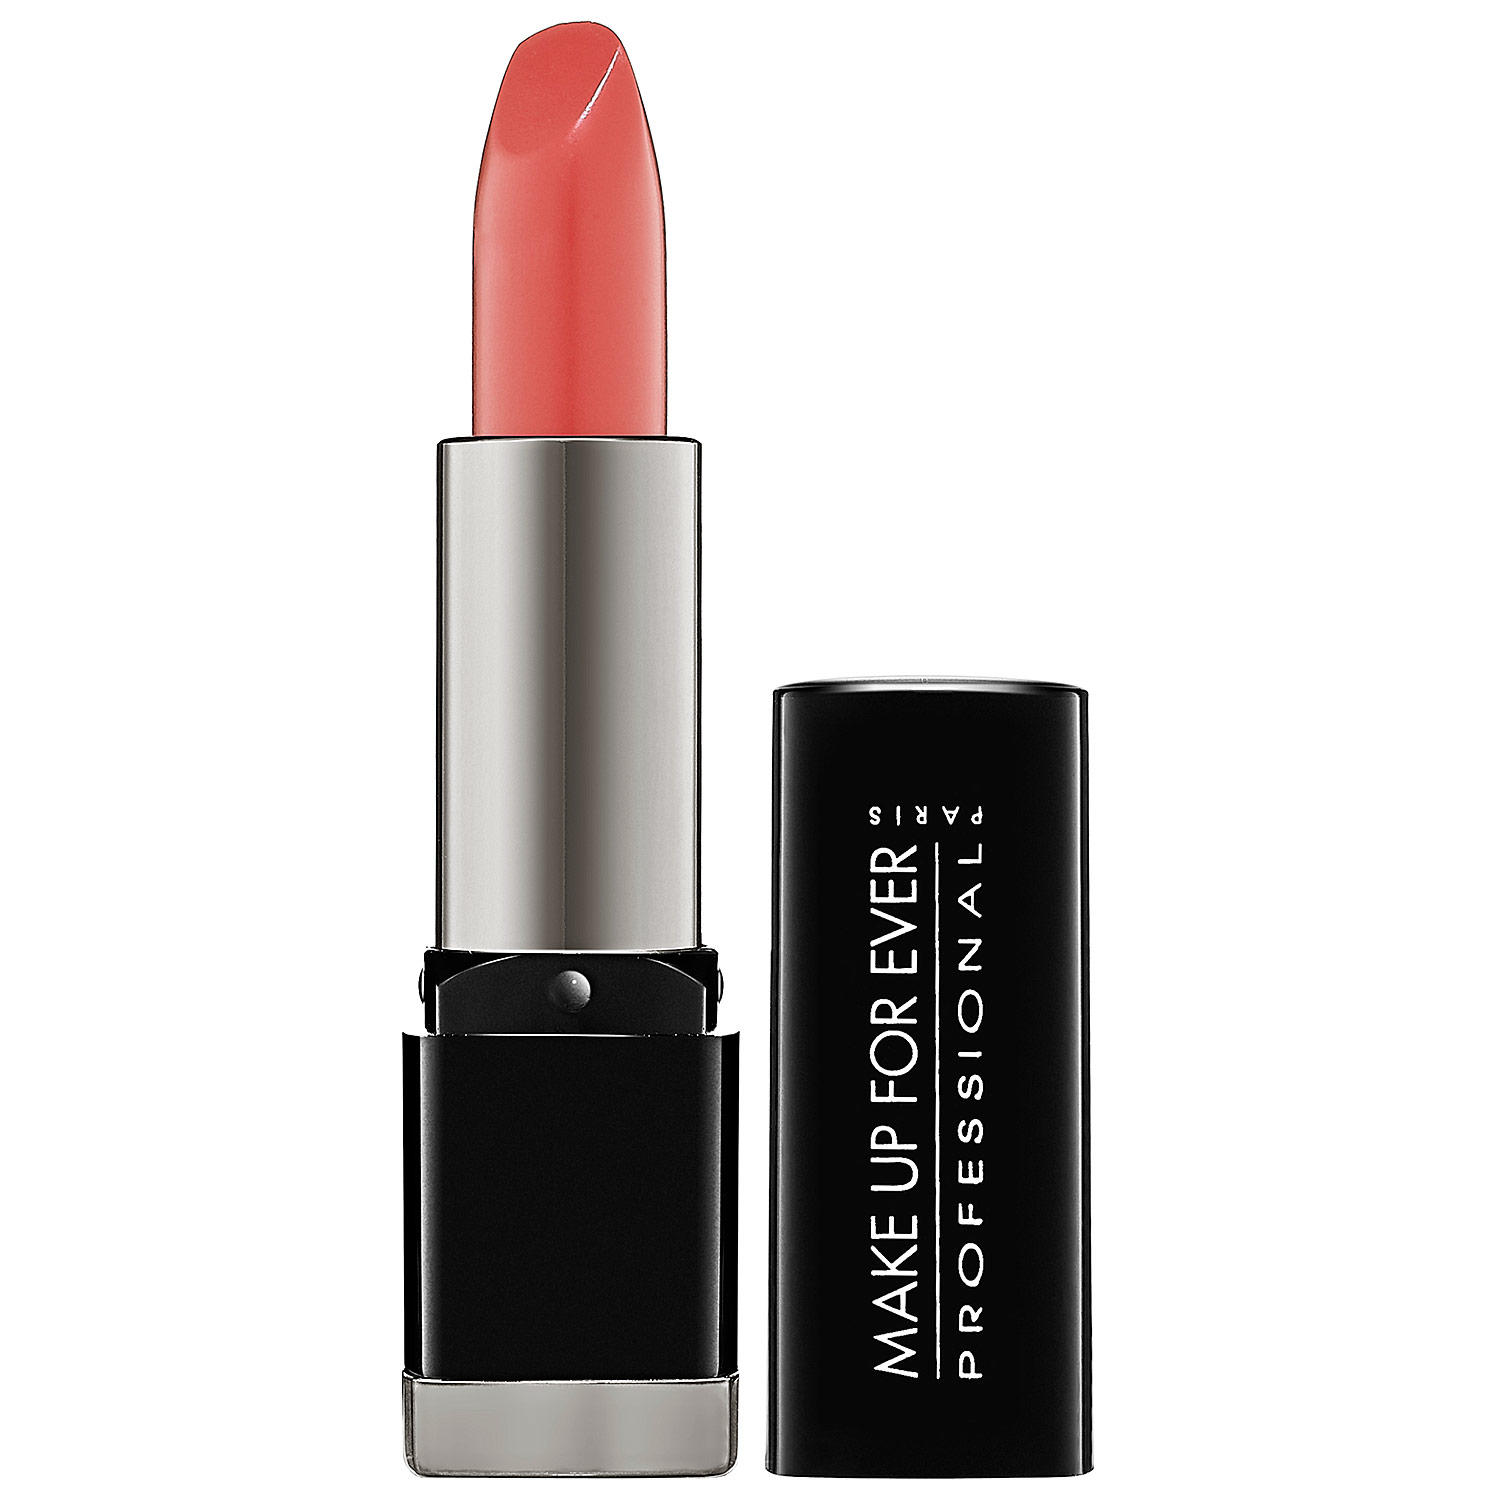 Makeup Forever Rouge Artist Intense Lipstick Satin Coral 38